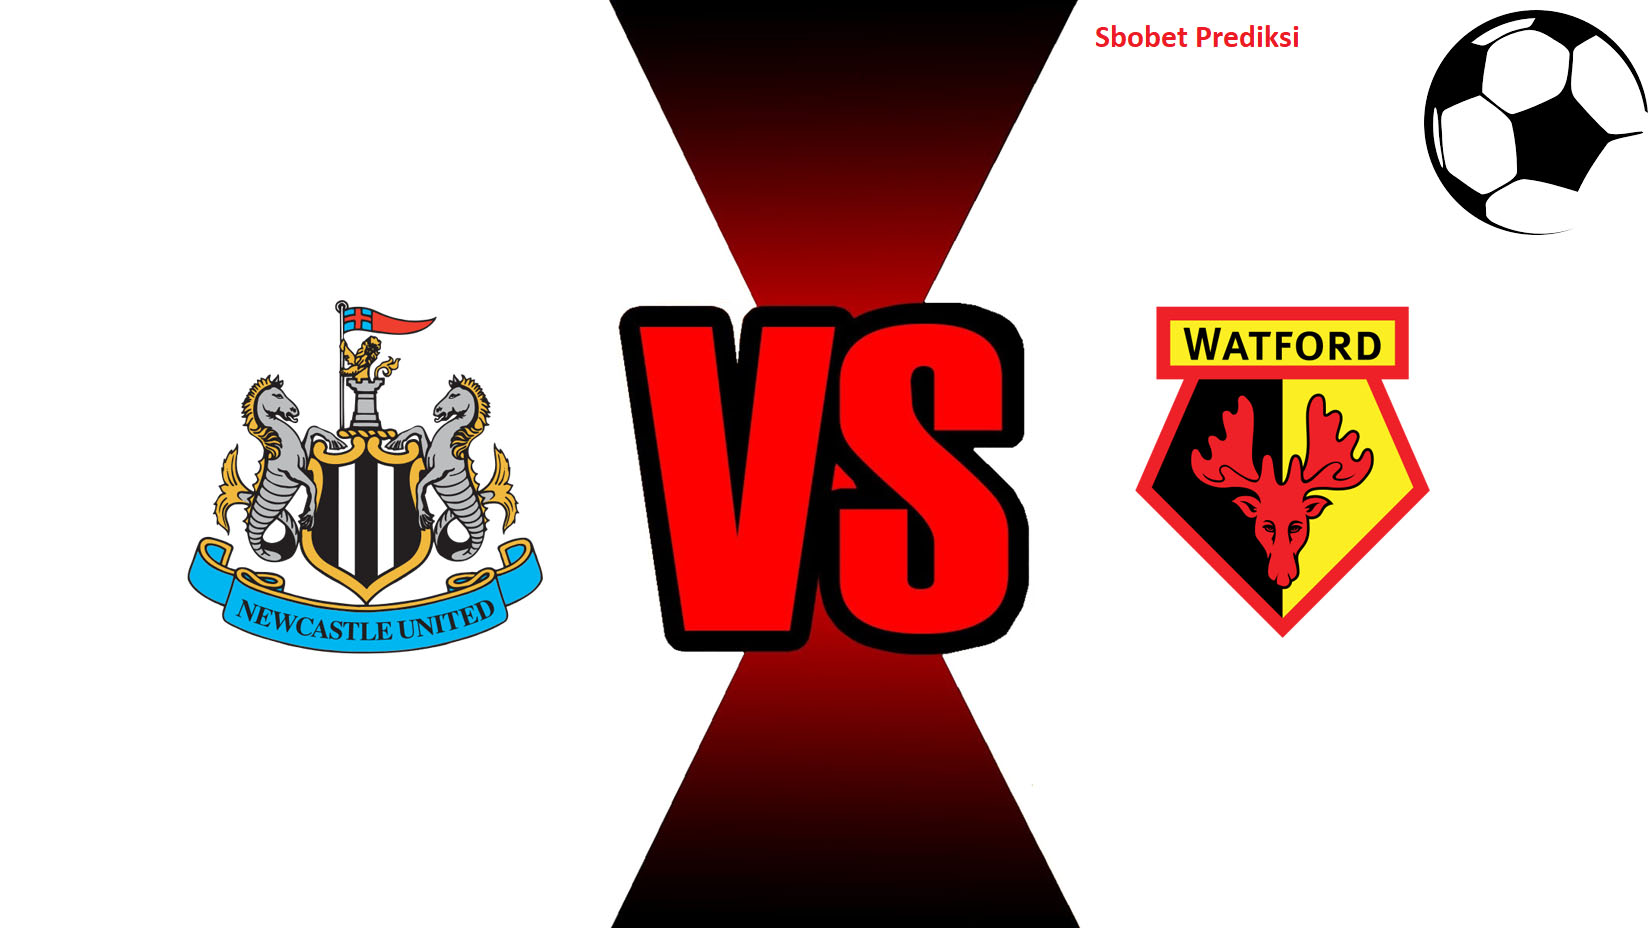 Prediksi Skor Pertandingan Newcastle United vs Watford 3 November 2018